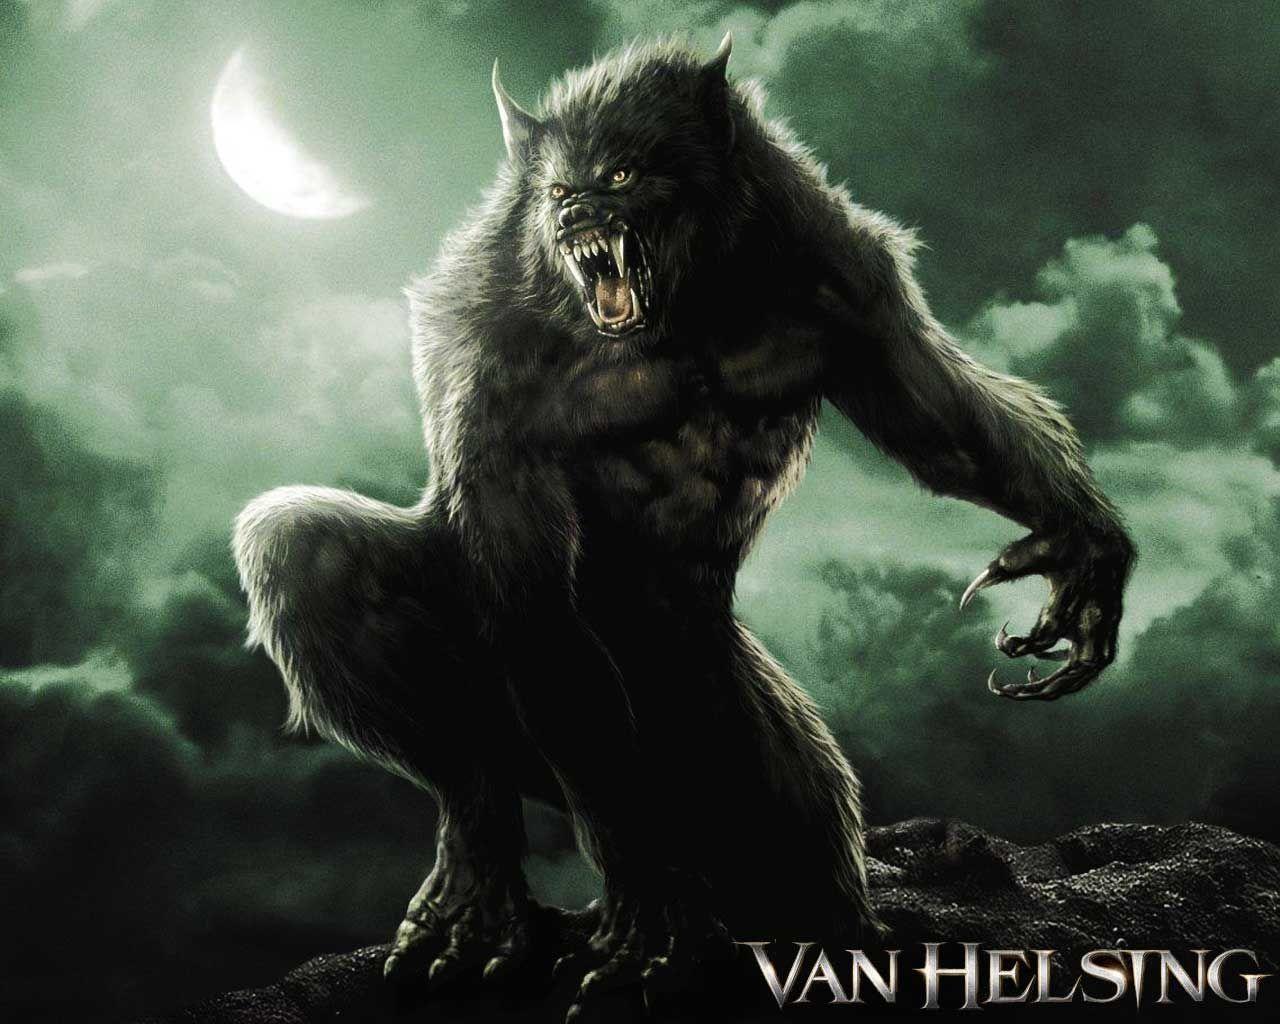 Van Helsing Werewolf Wallpapers High Definition On Wallpapers 1080p HD